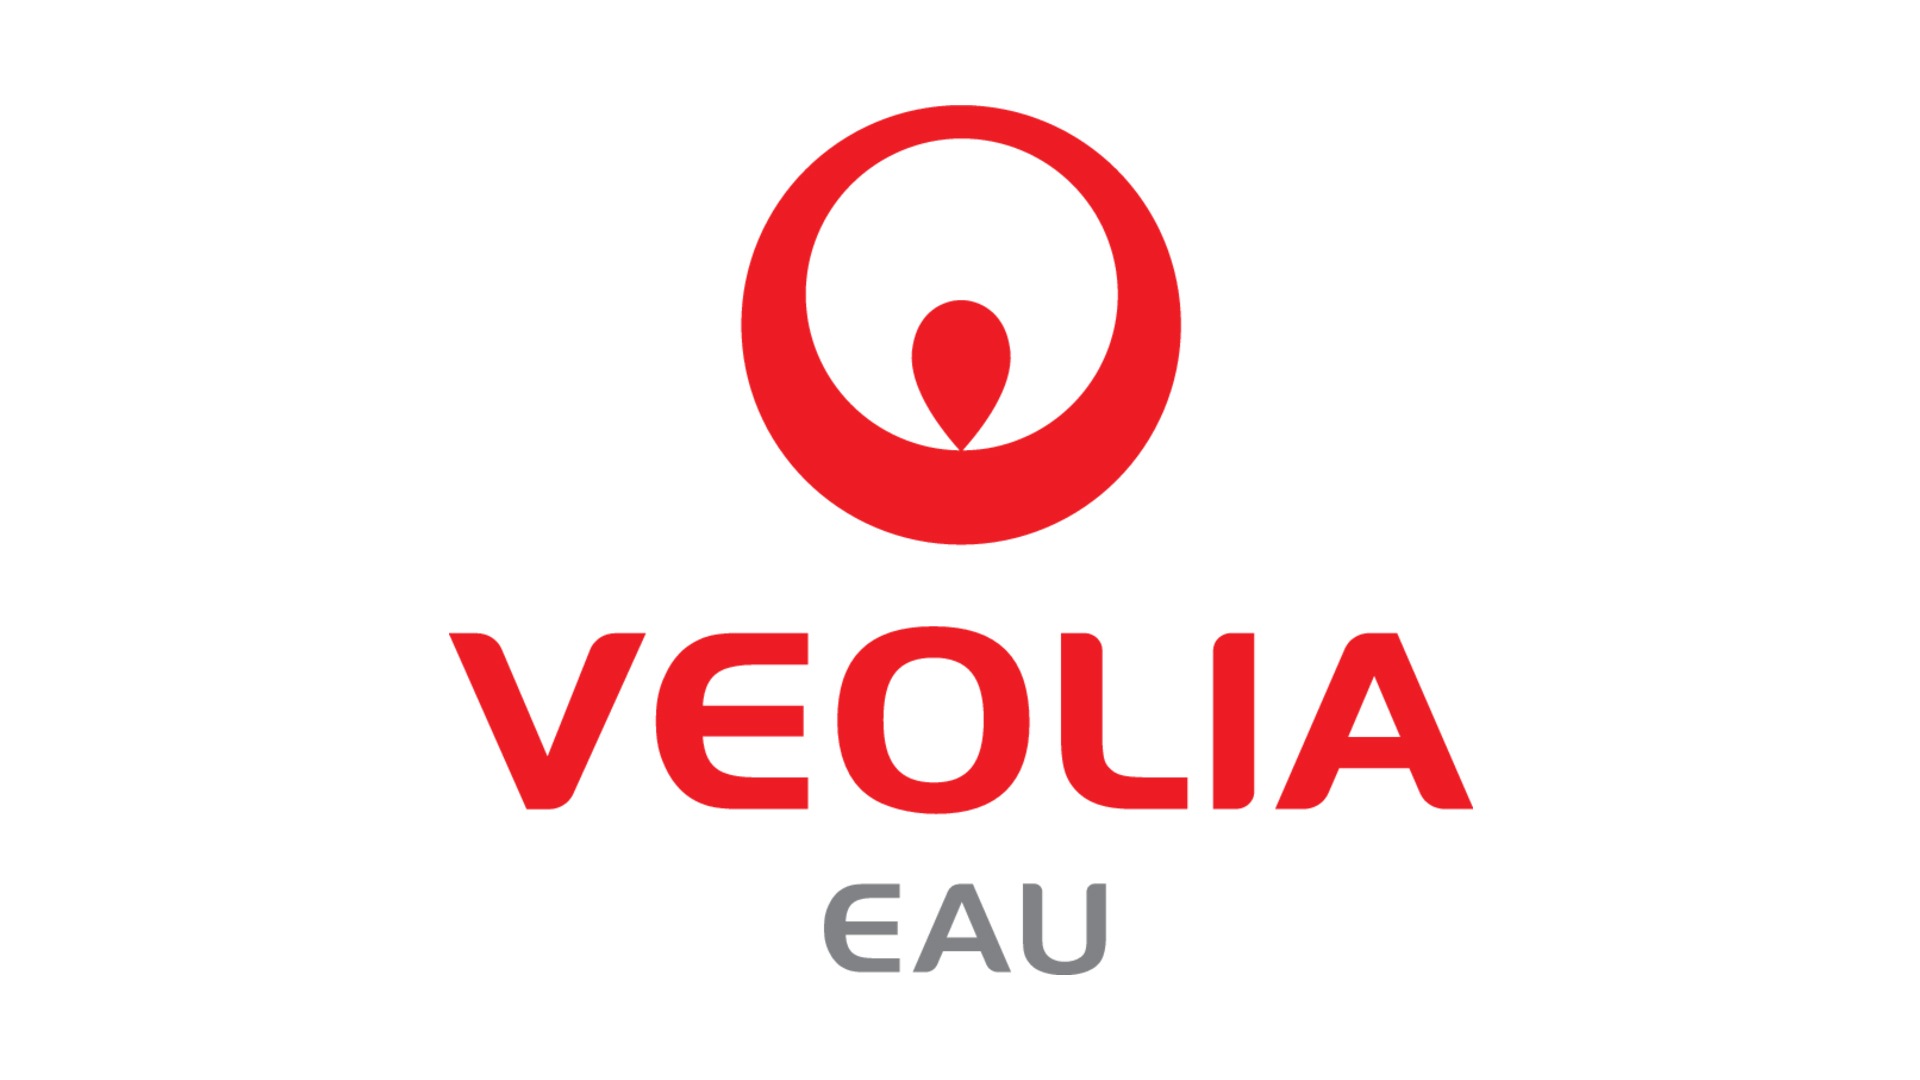 Veolia logo : histoire, signification et évolution, symbole